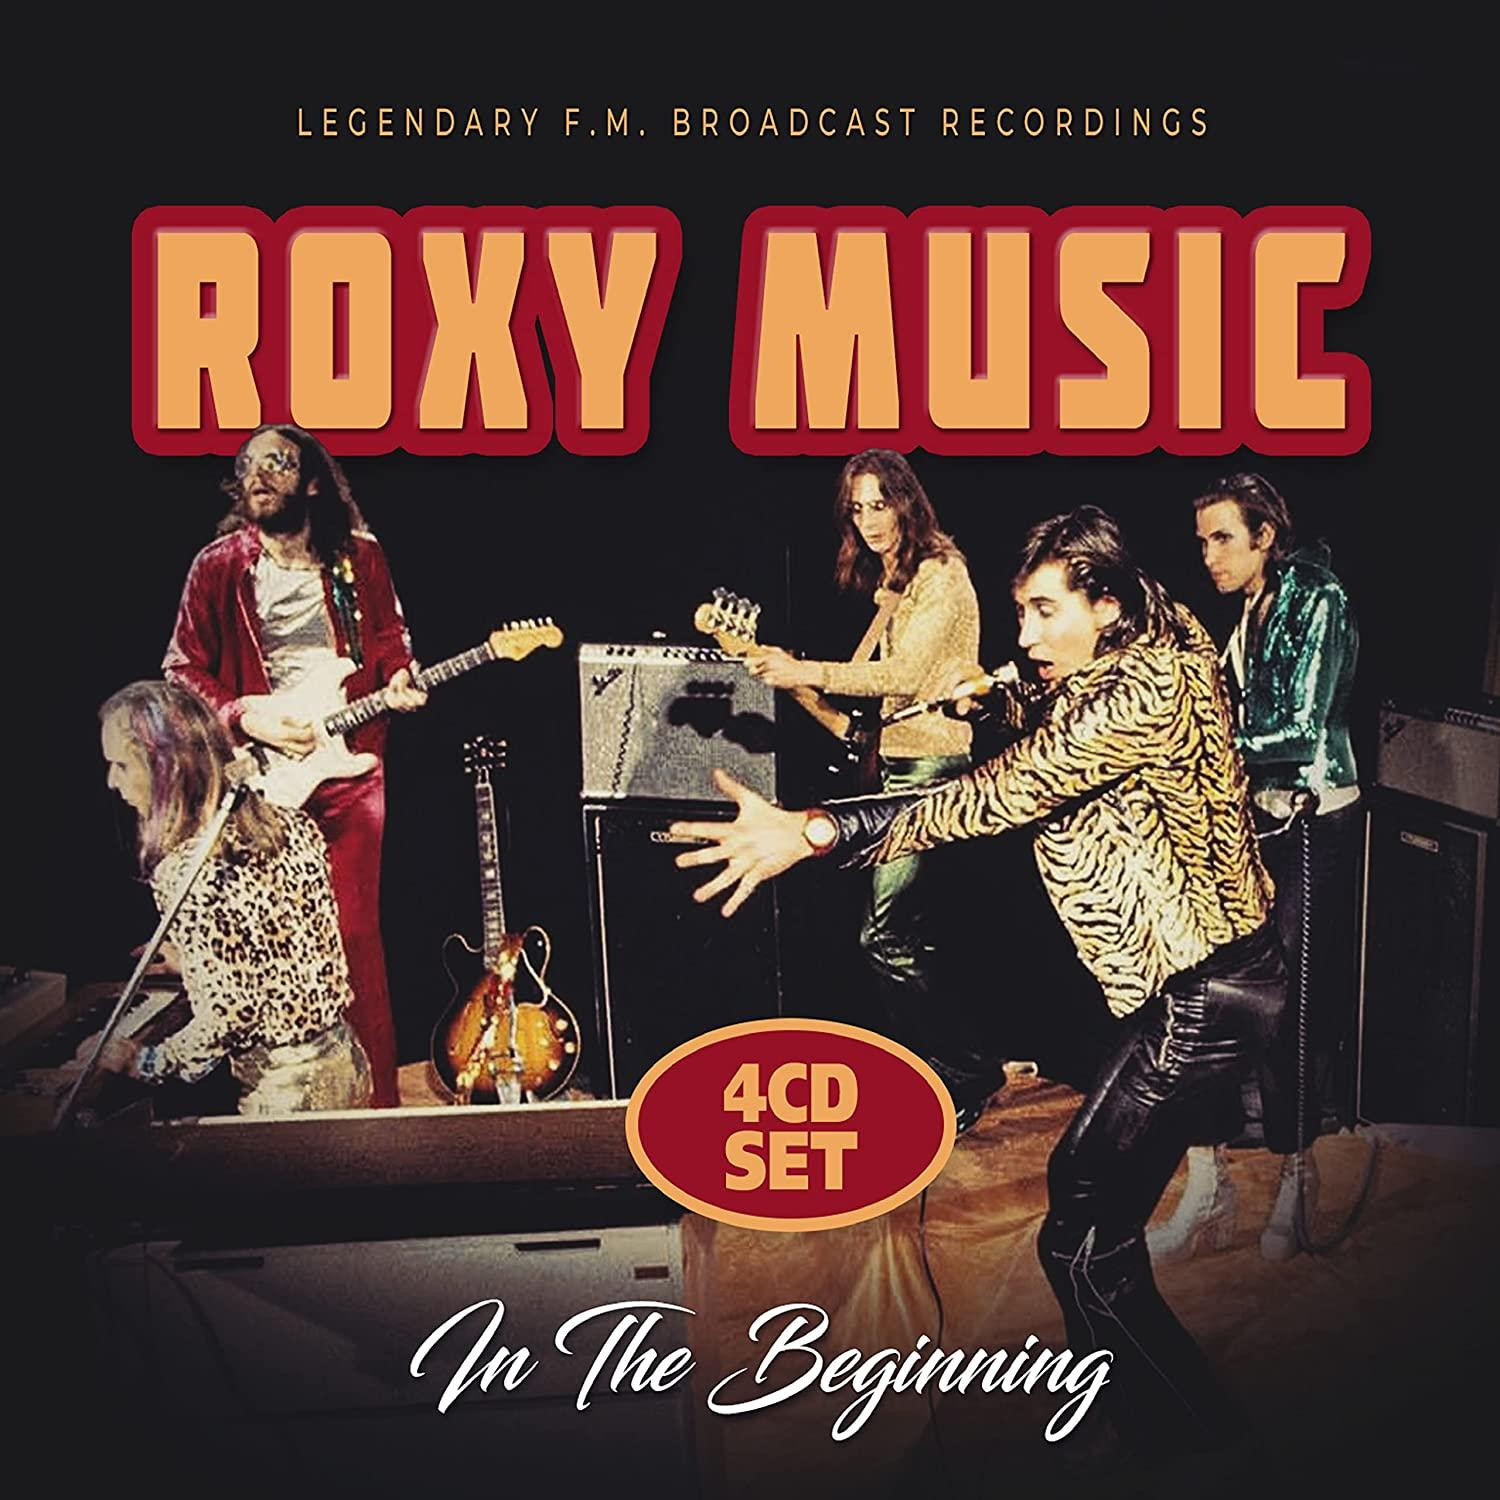 Roxy (CD) Broadca In (4-CD - - Beginning The Music Set)-Legendary FM